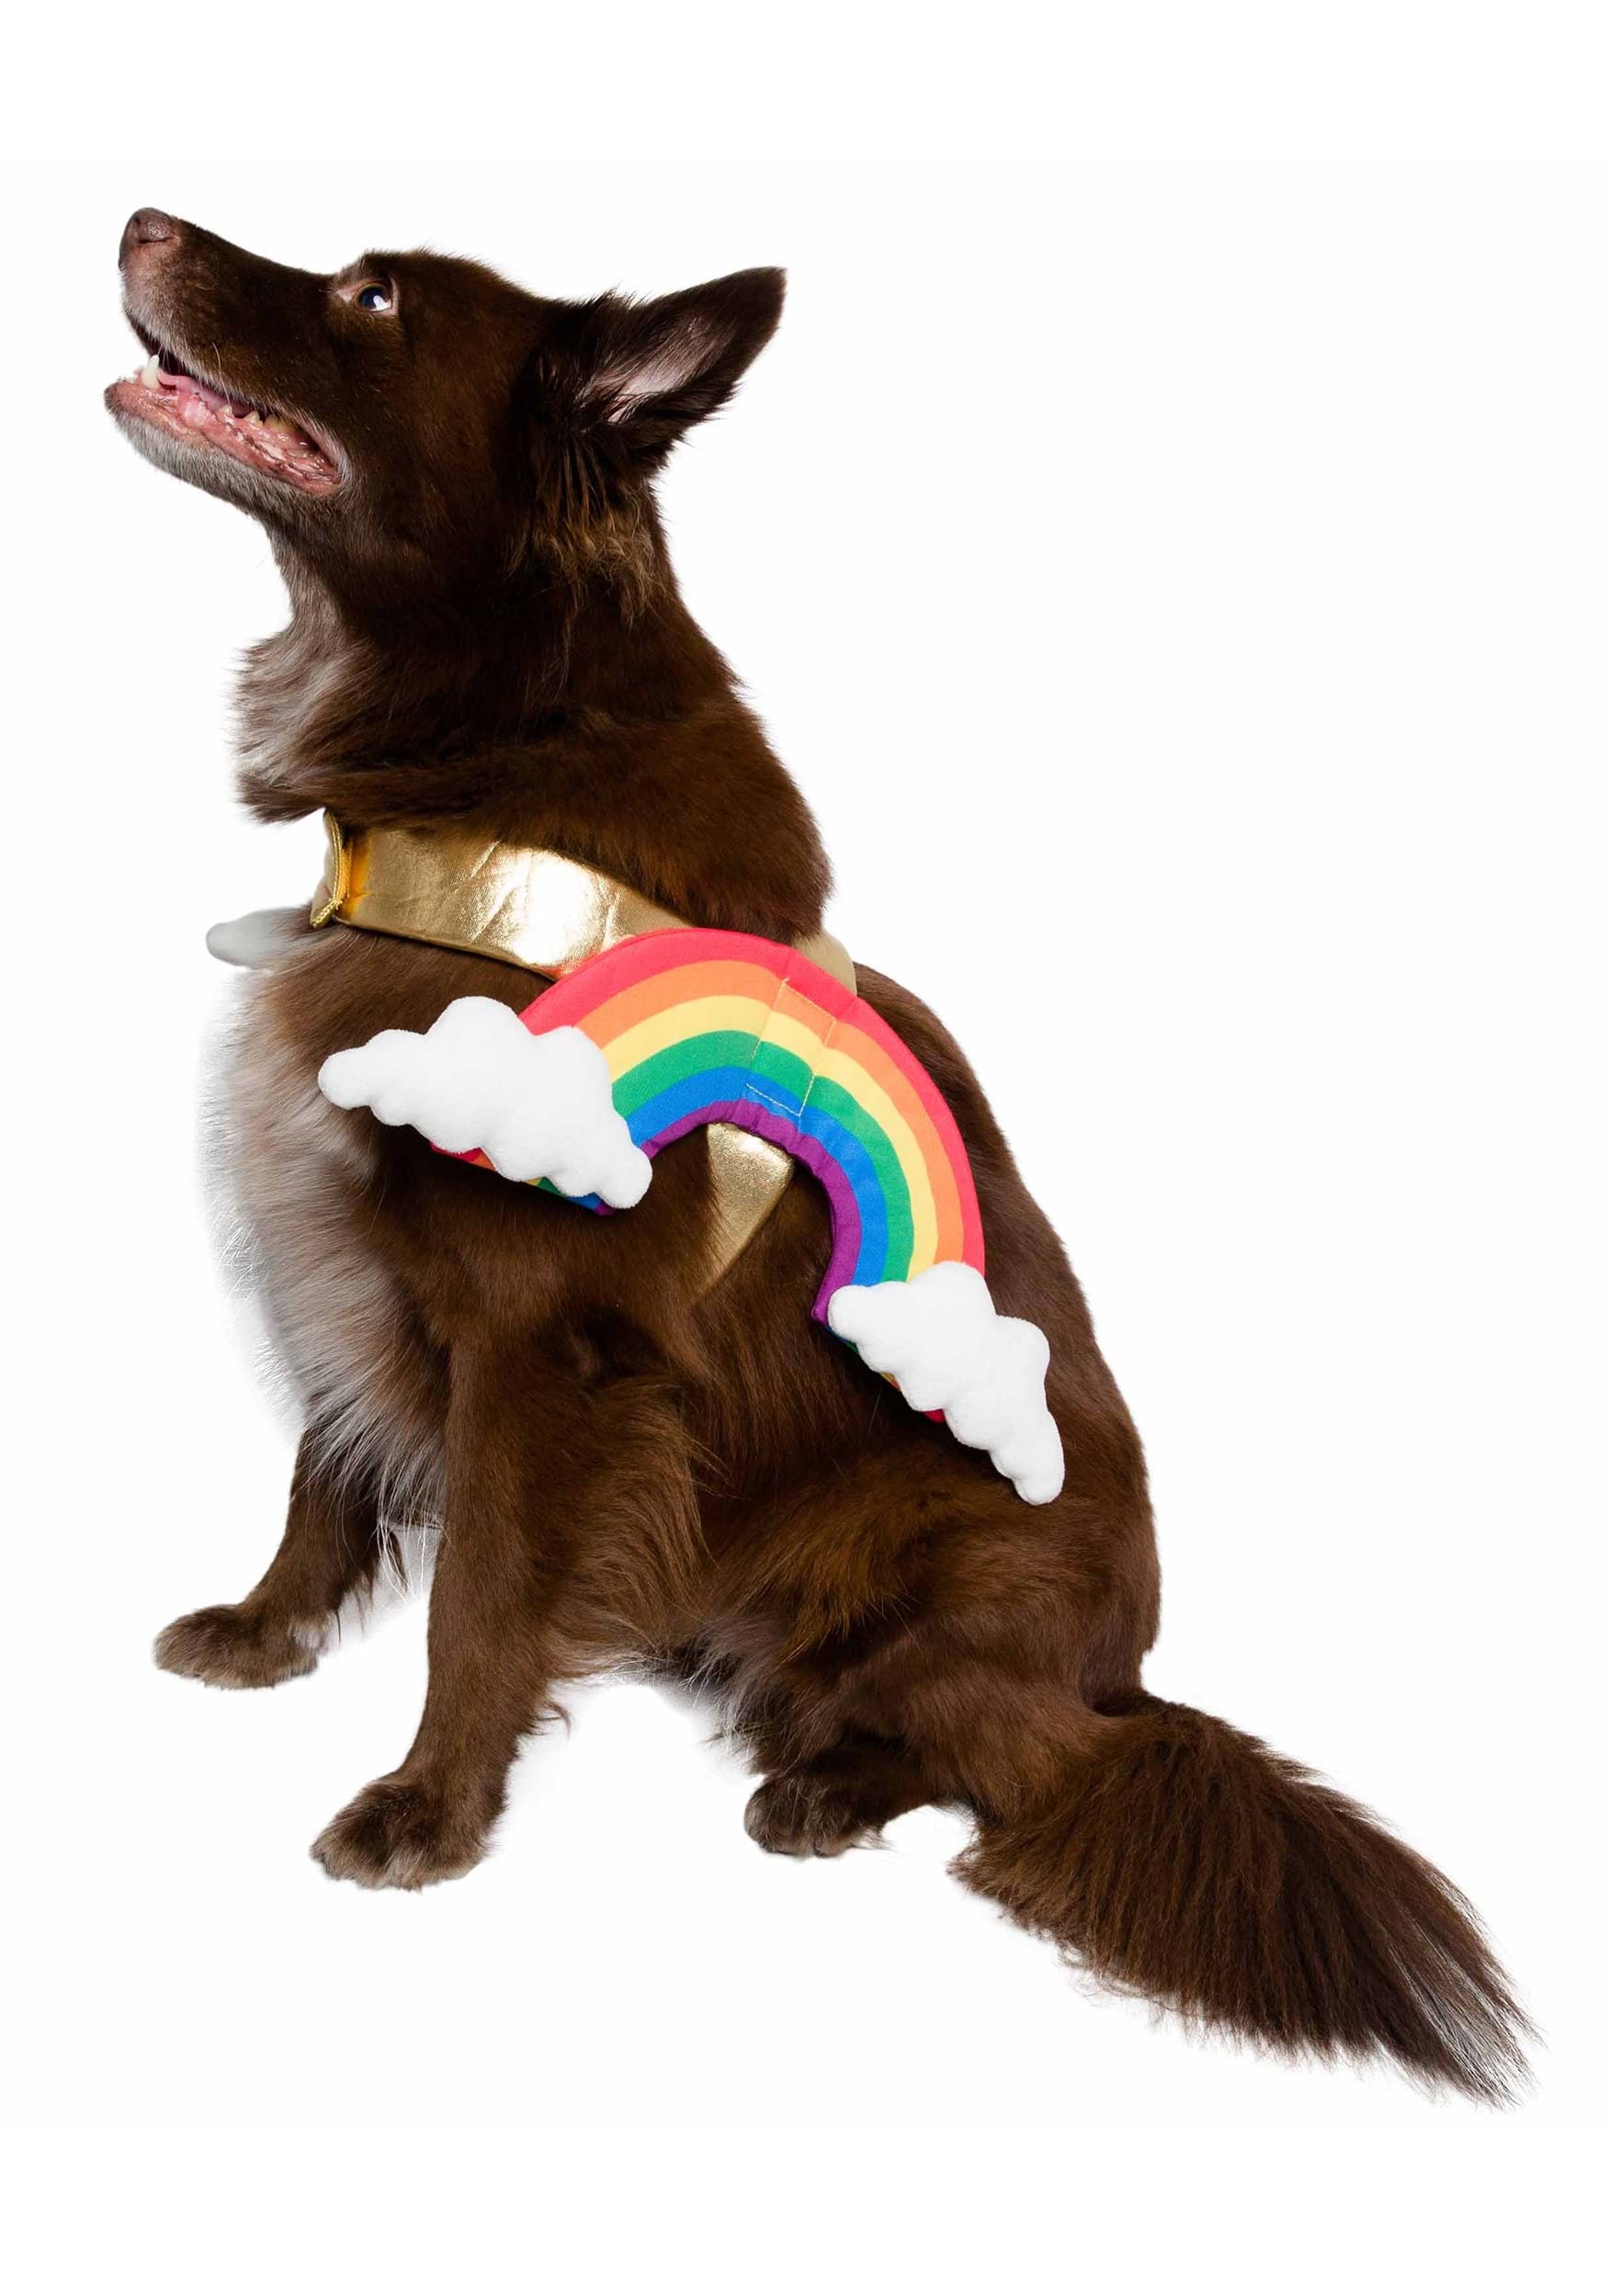 Rainbow Dog Costume